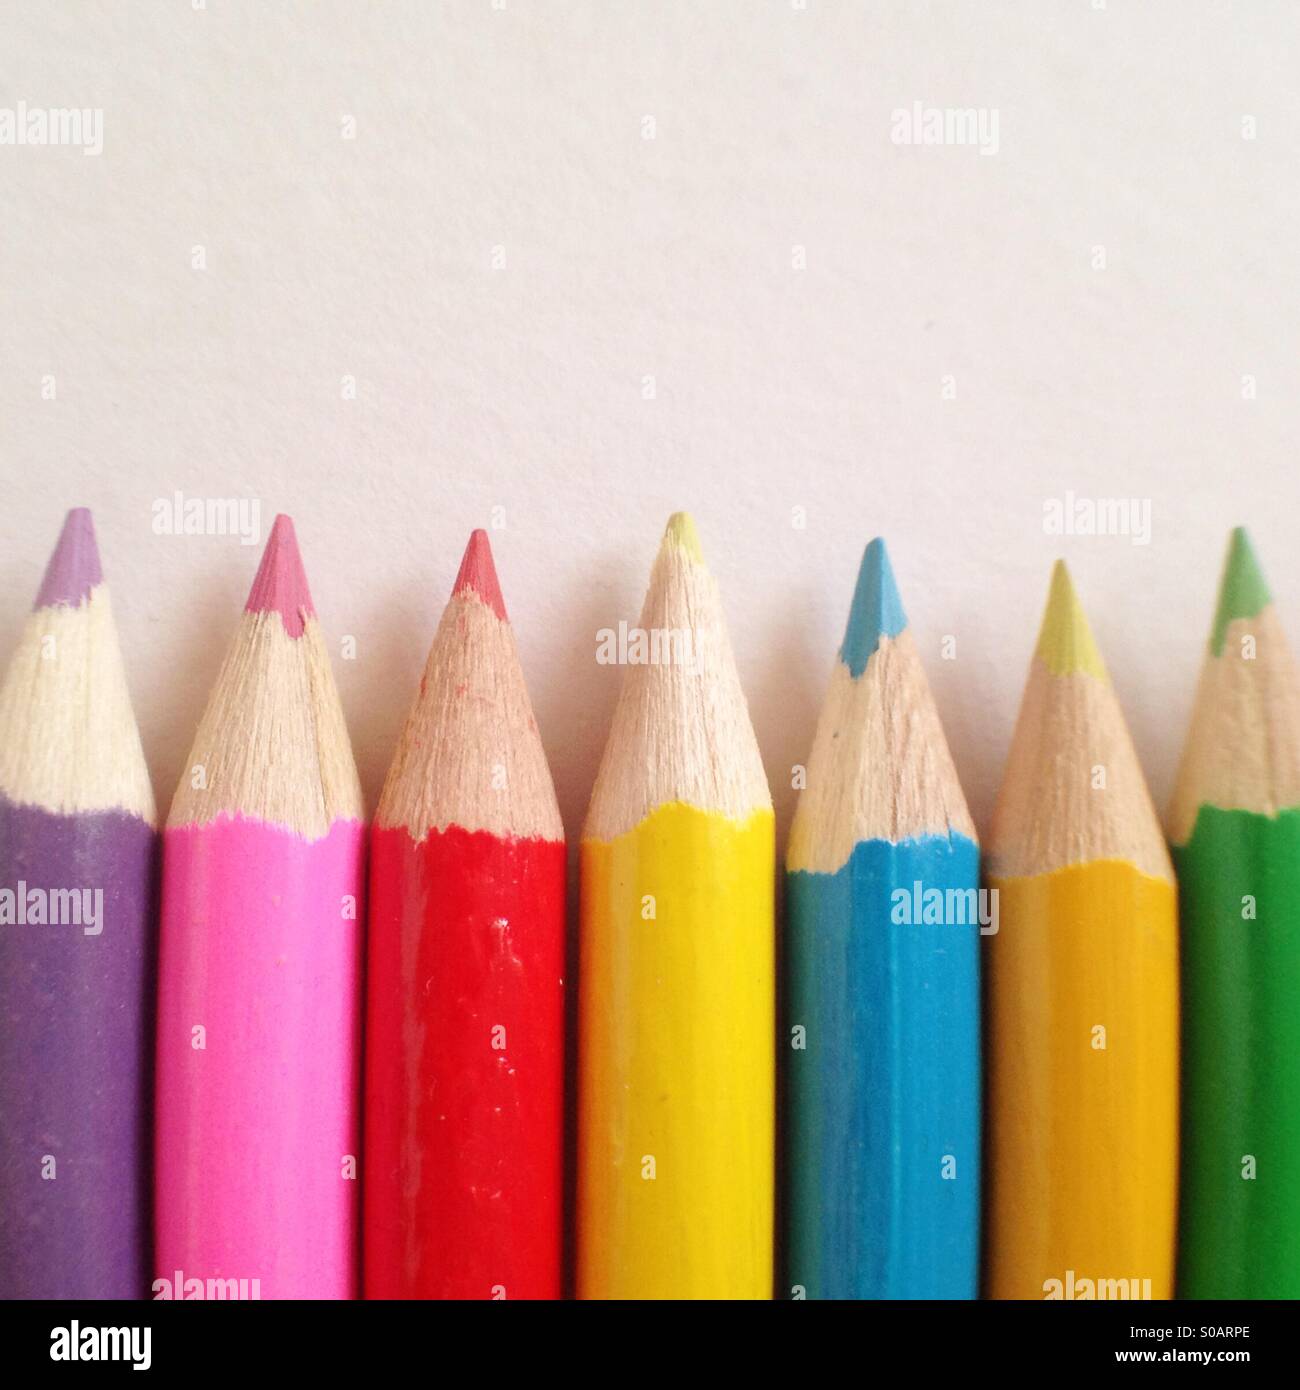 Colouring pencils Stock Photo - Alamy